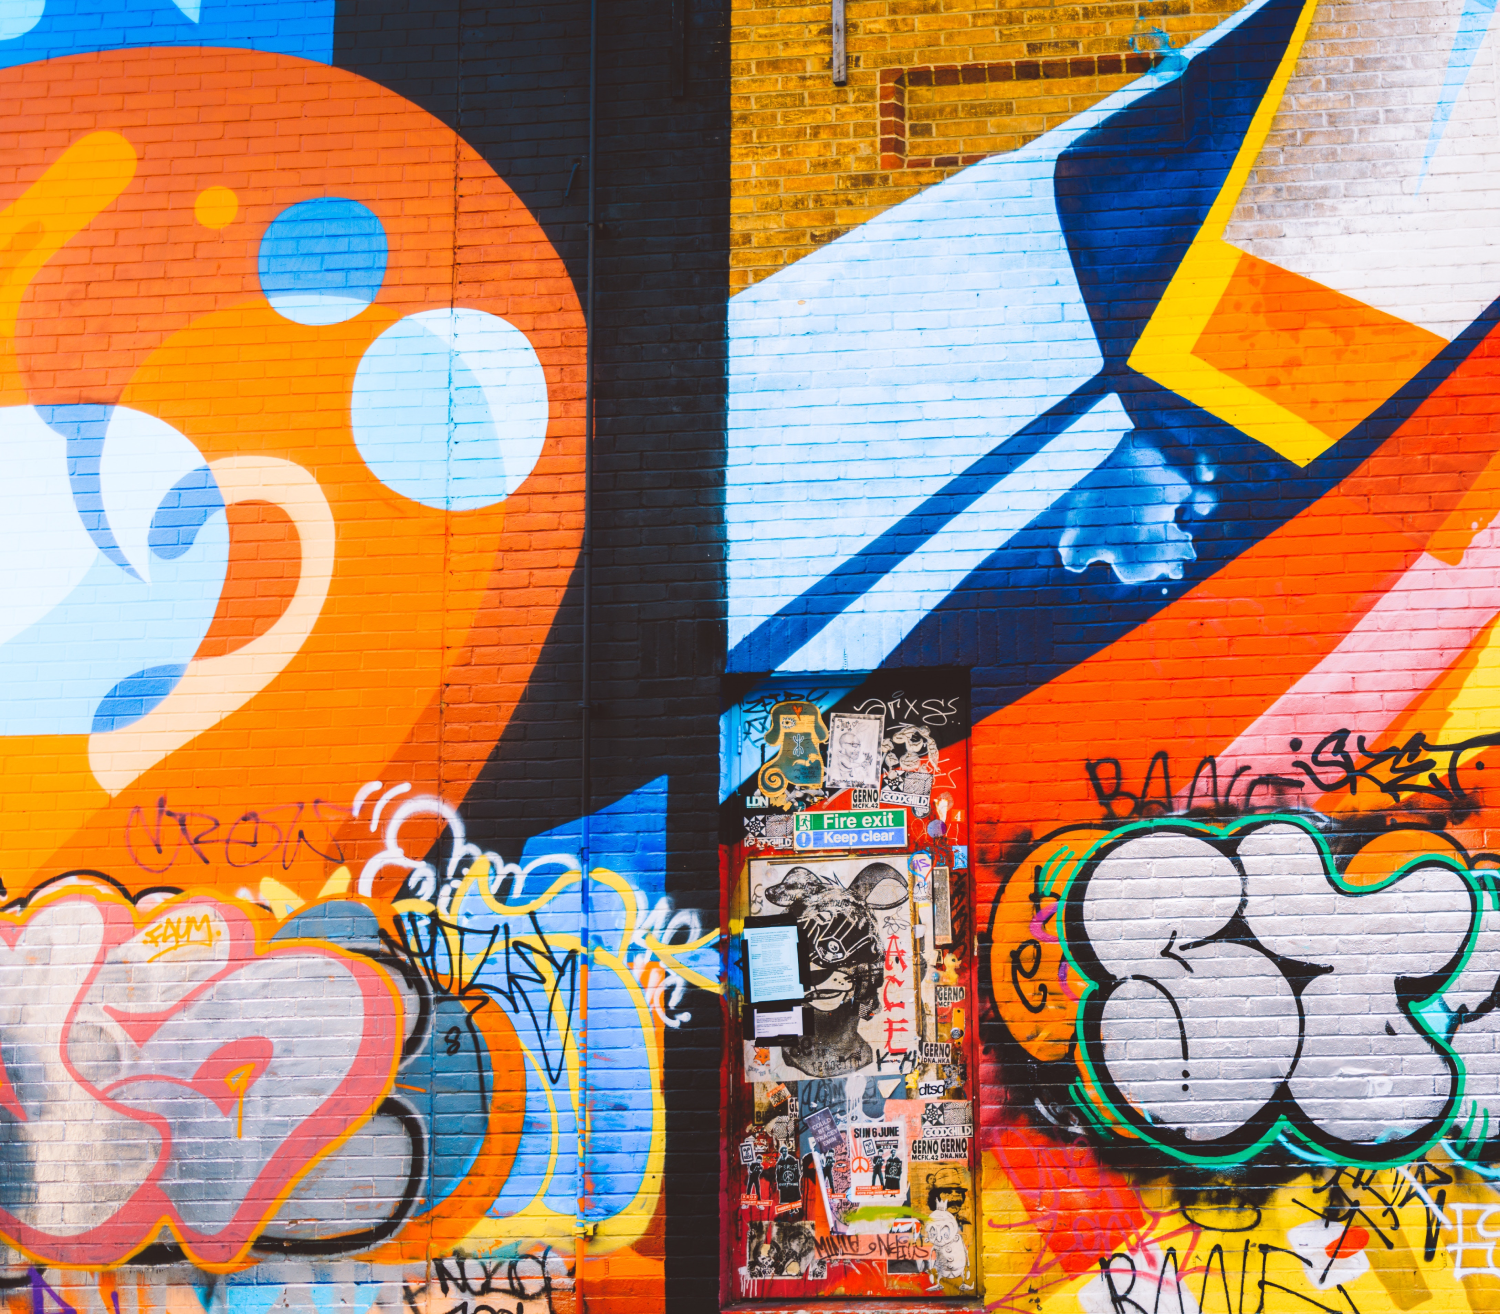 Beyond Vandalism: The Art and Impact of Graffiti in Urban Spaces